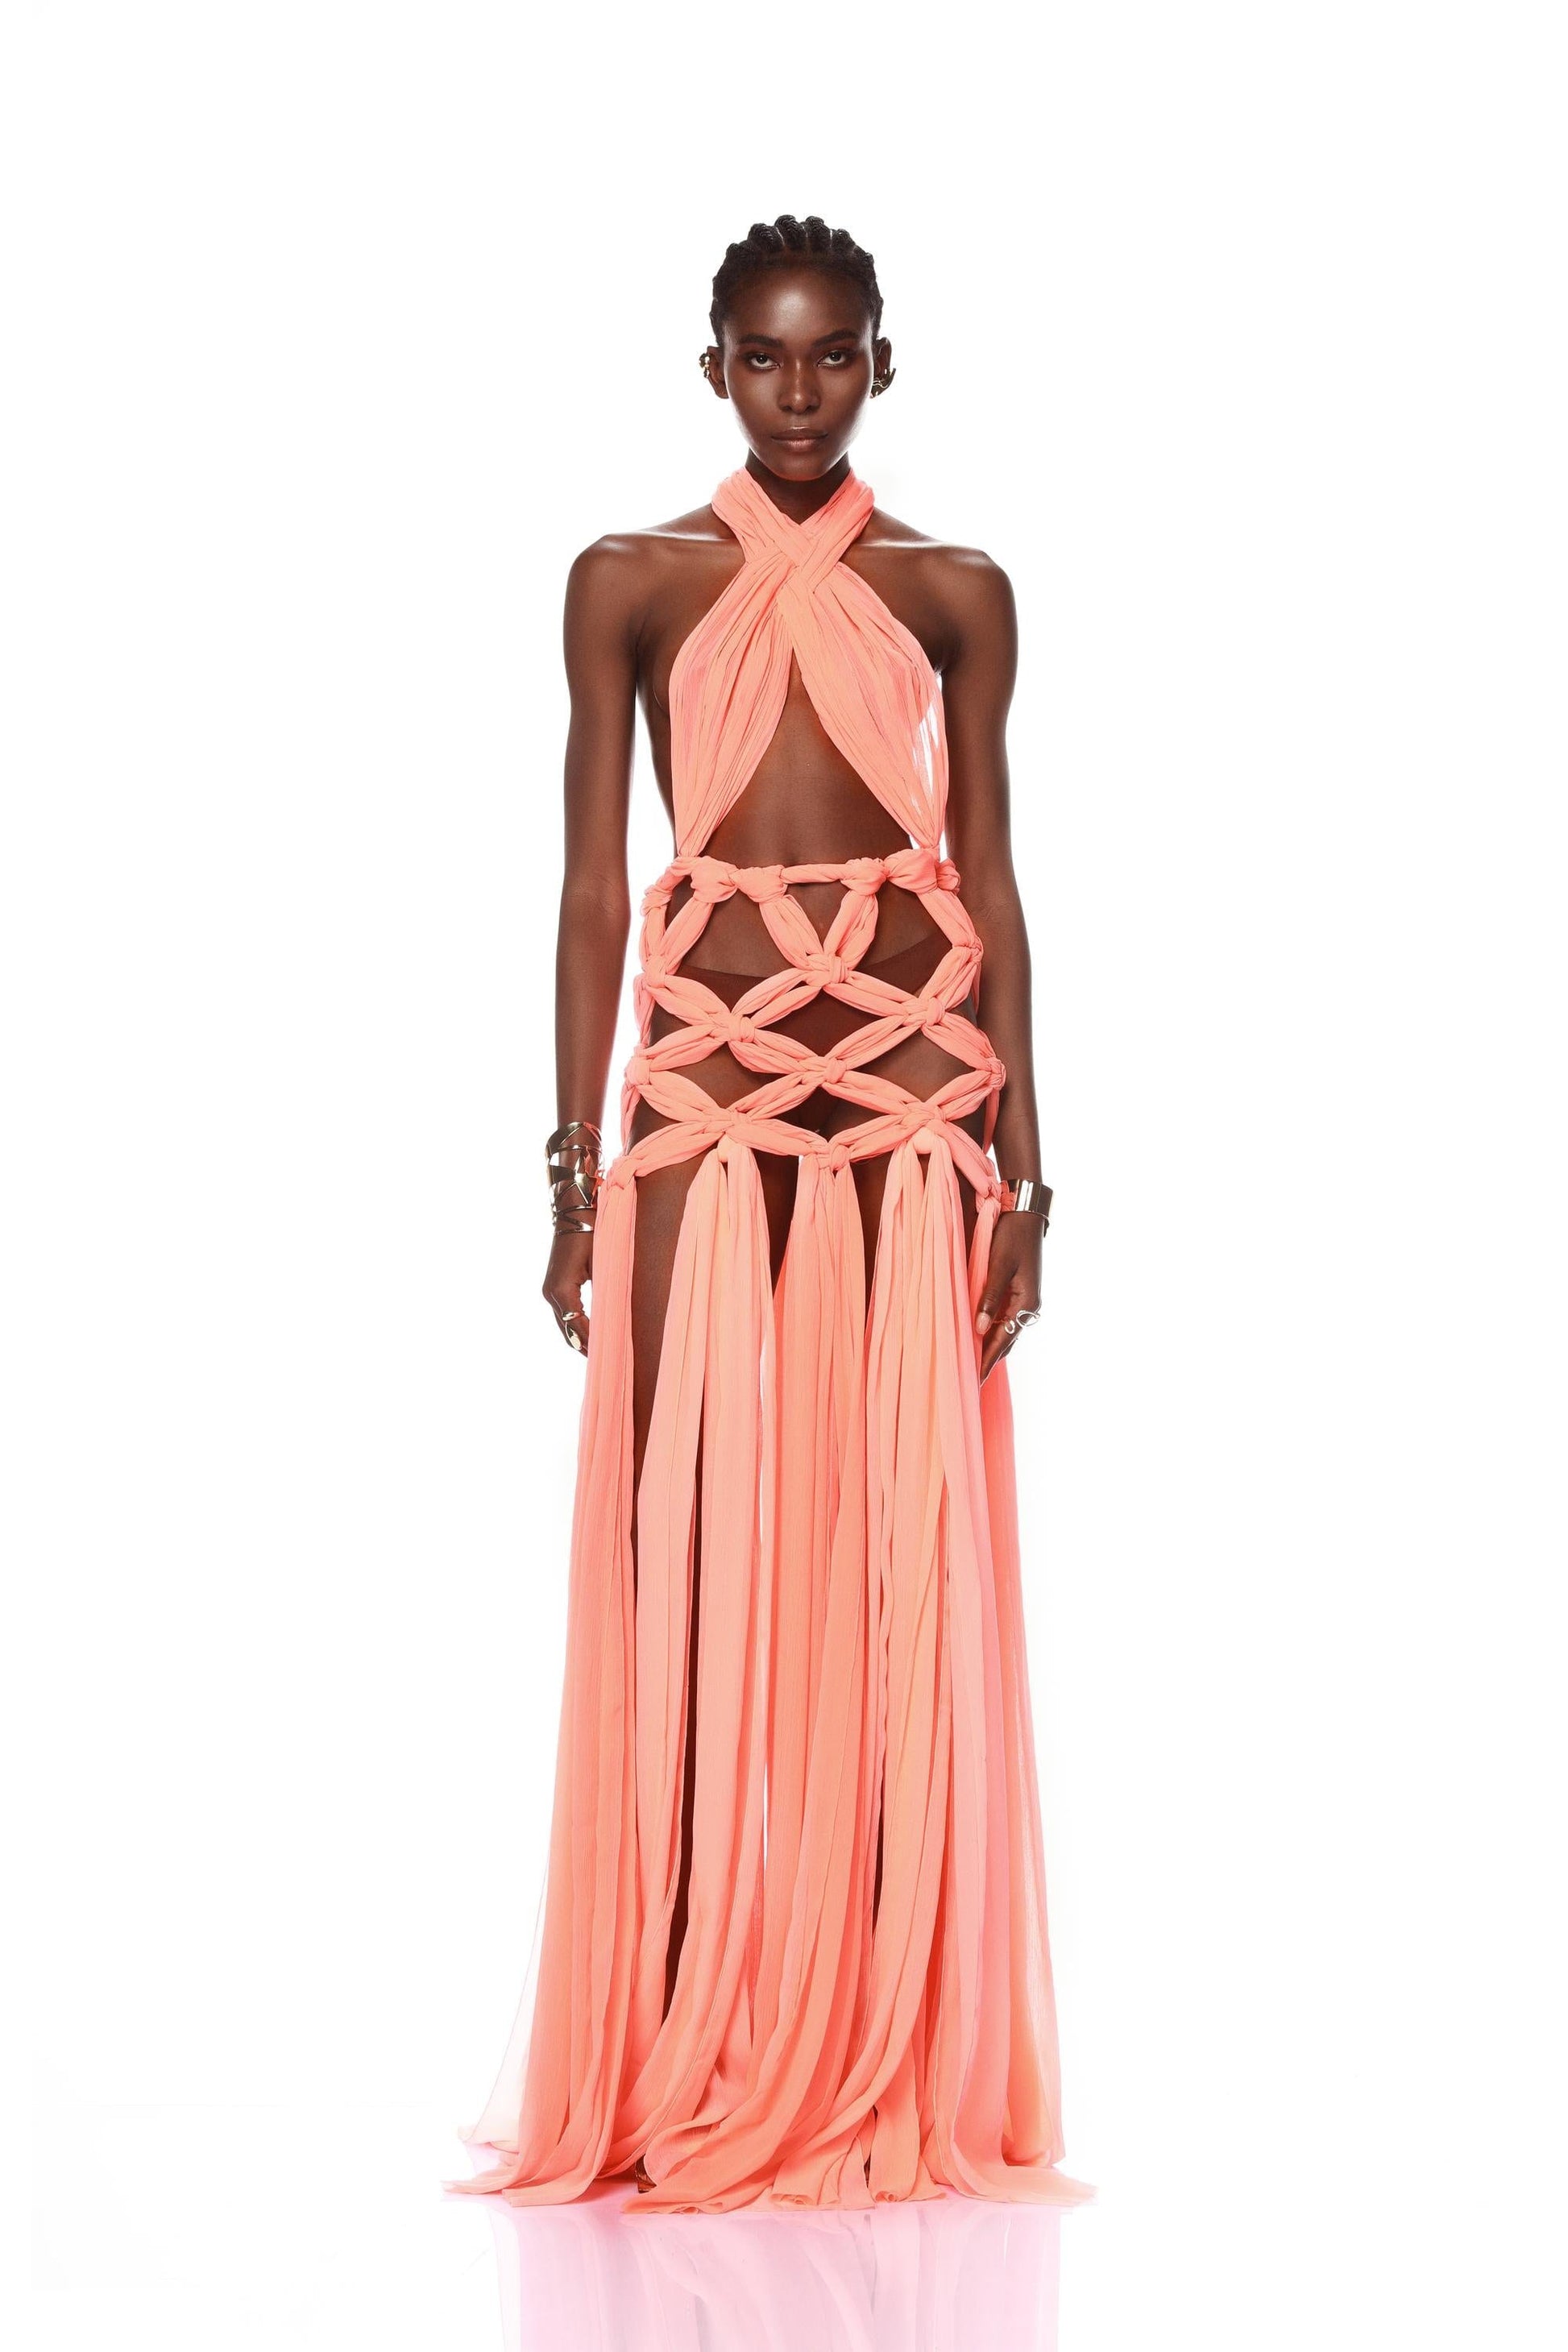 somalia-pink-gown-01